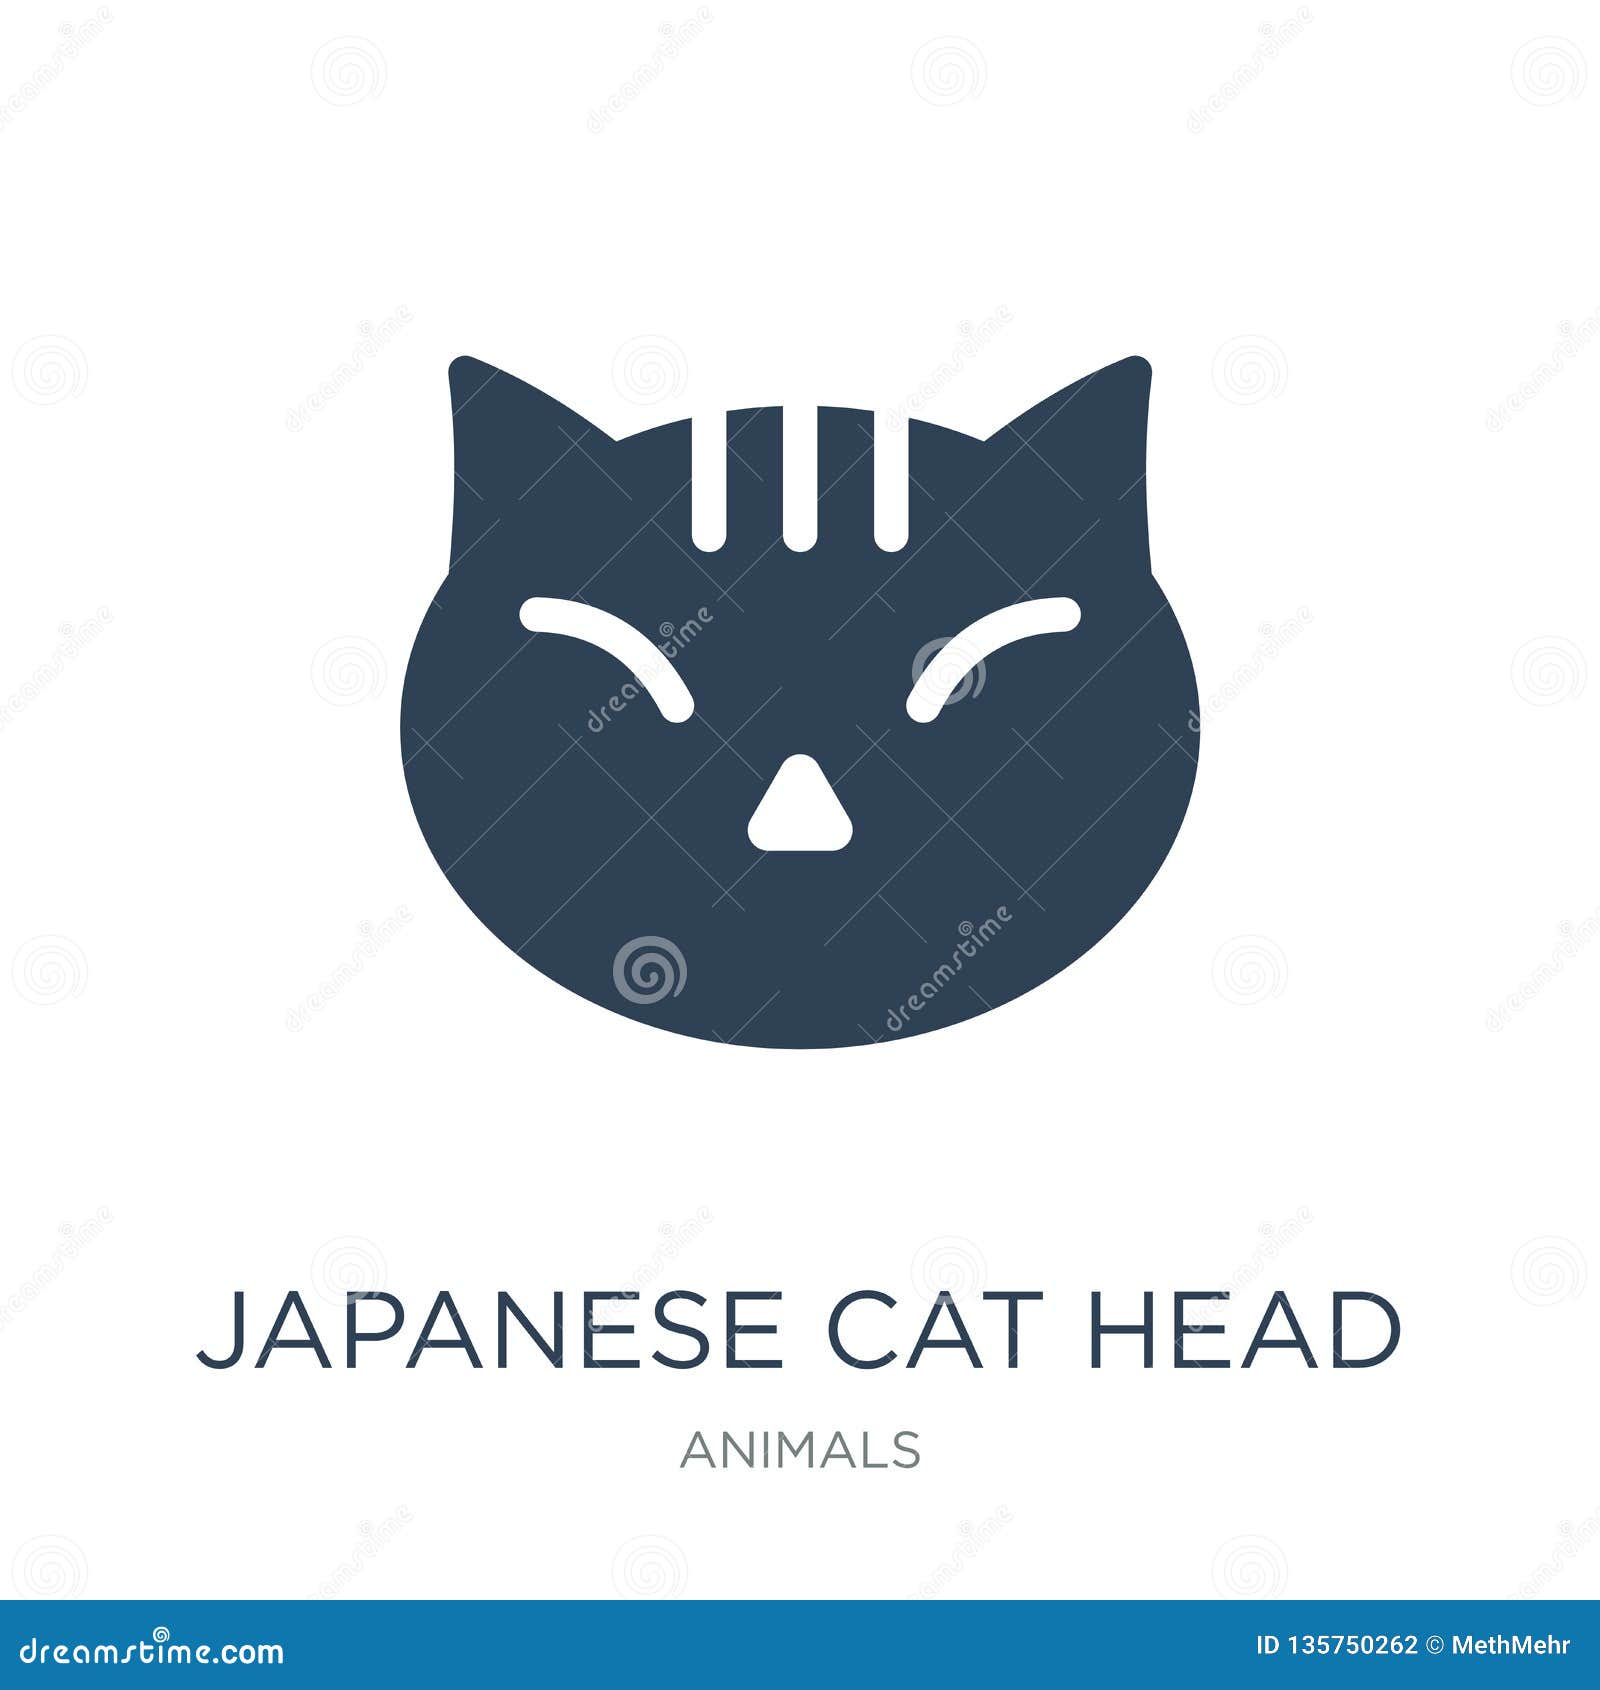 Premium Vector  A cat head icon japan style